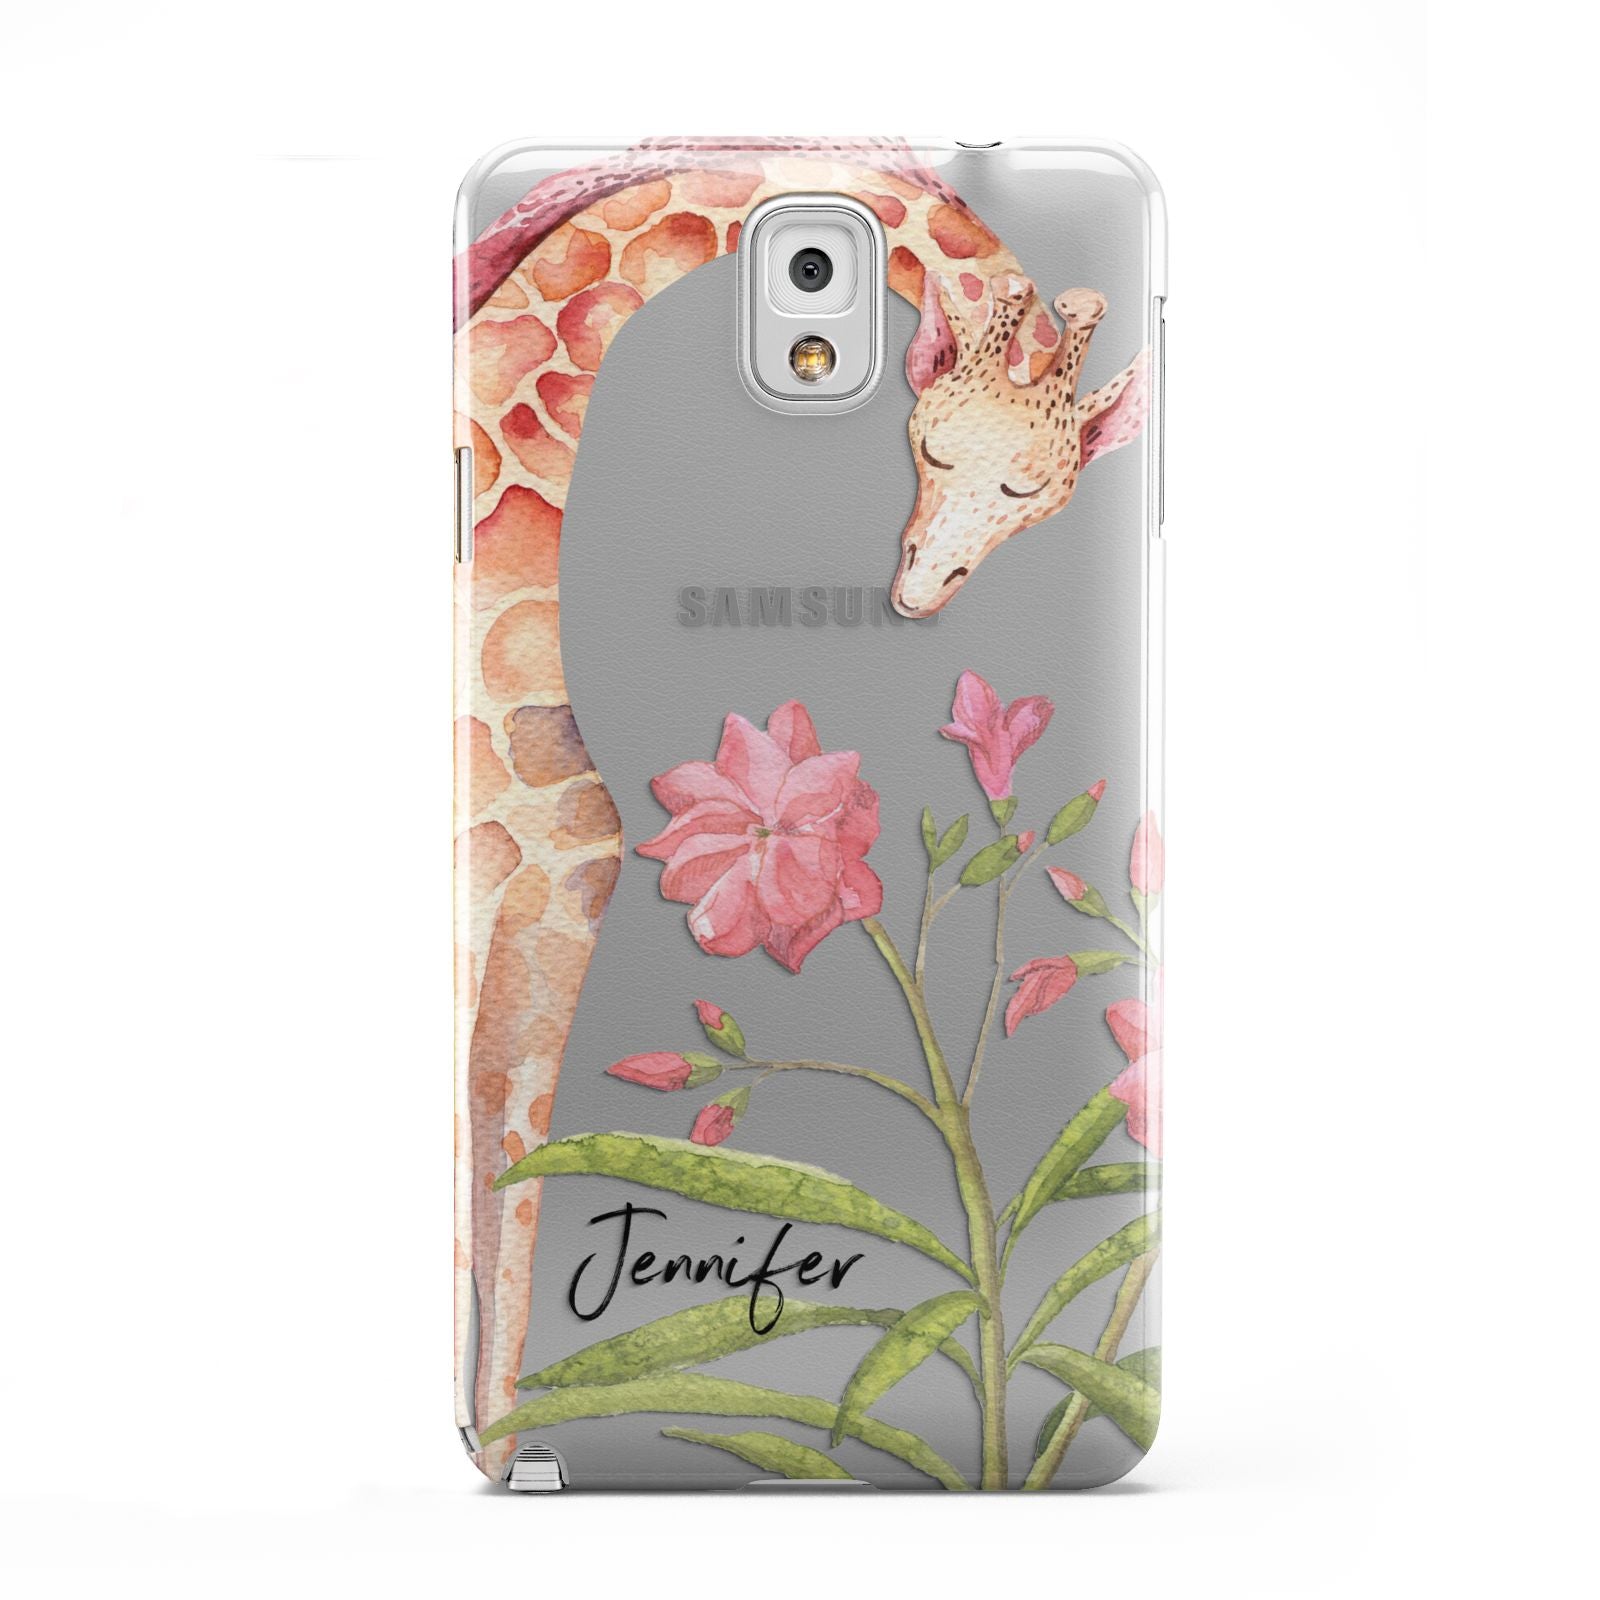 Personalised Giraffe Samsung Galaxy Note 3 Case